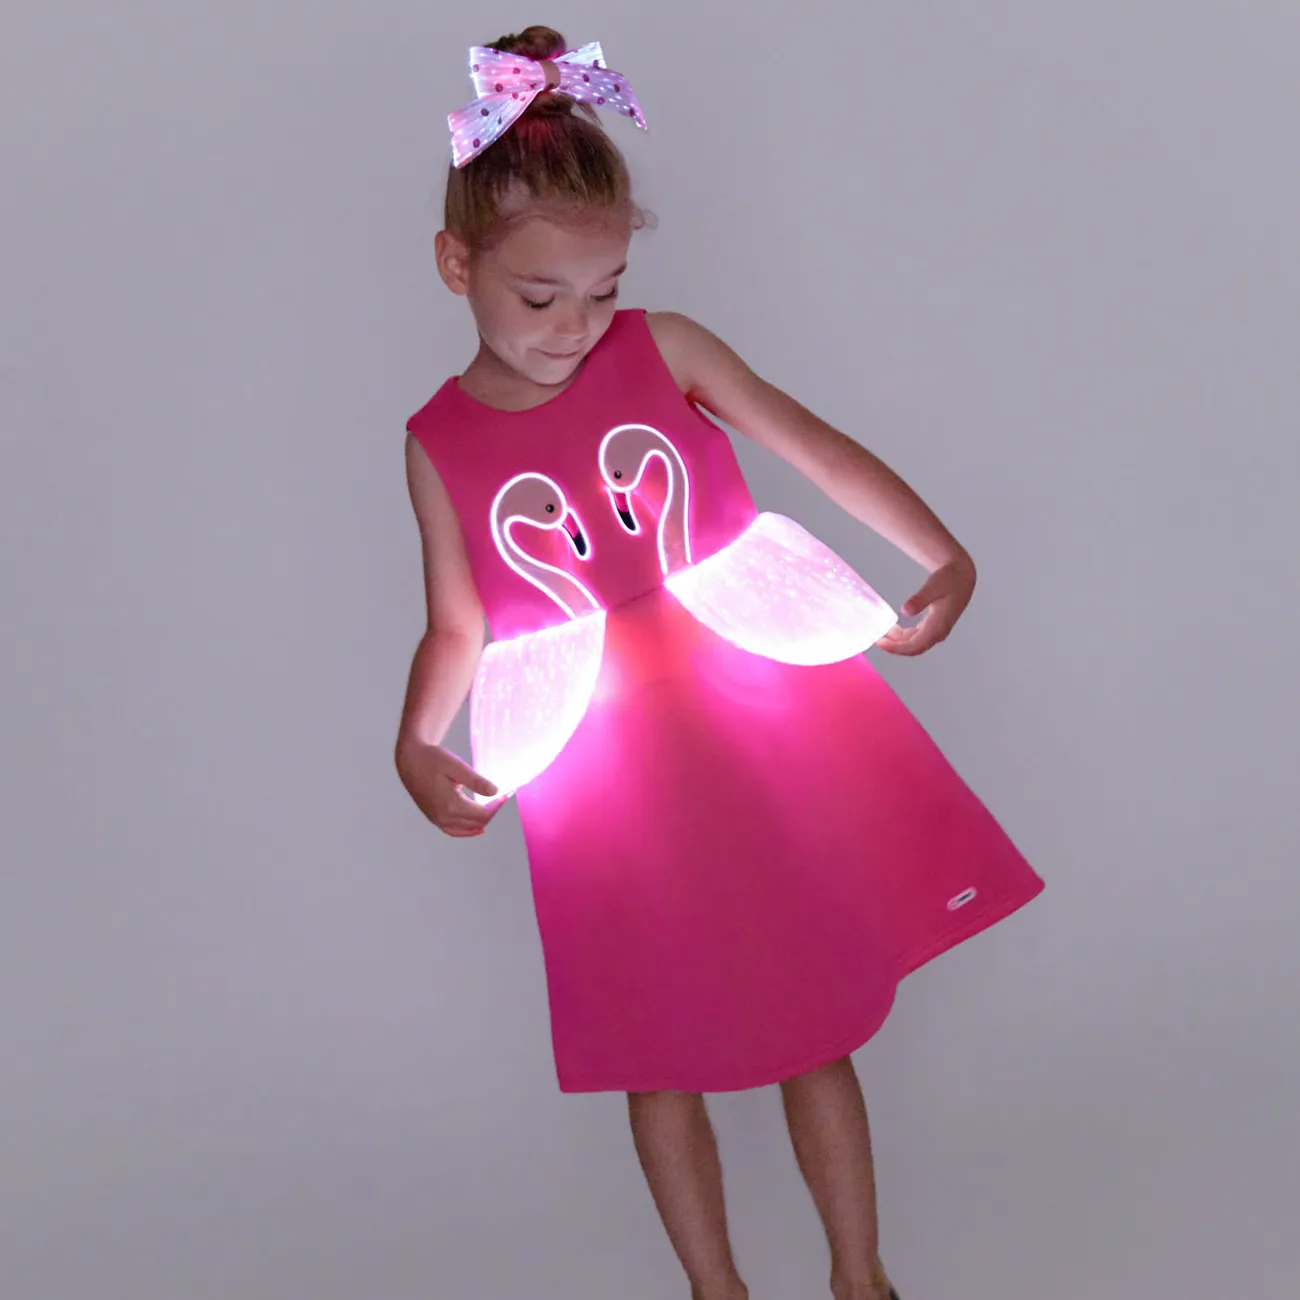 Go-Glow Illuminating Toddler Dress with Light Up Skirt Including Controller (Battery Inside) Hot Pink big image 1